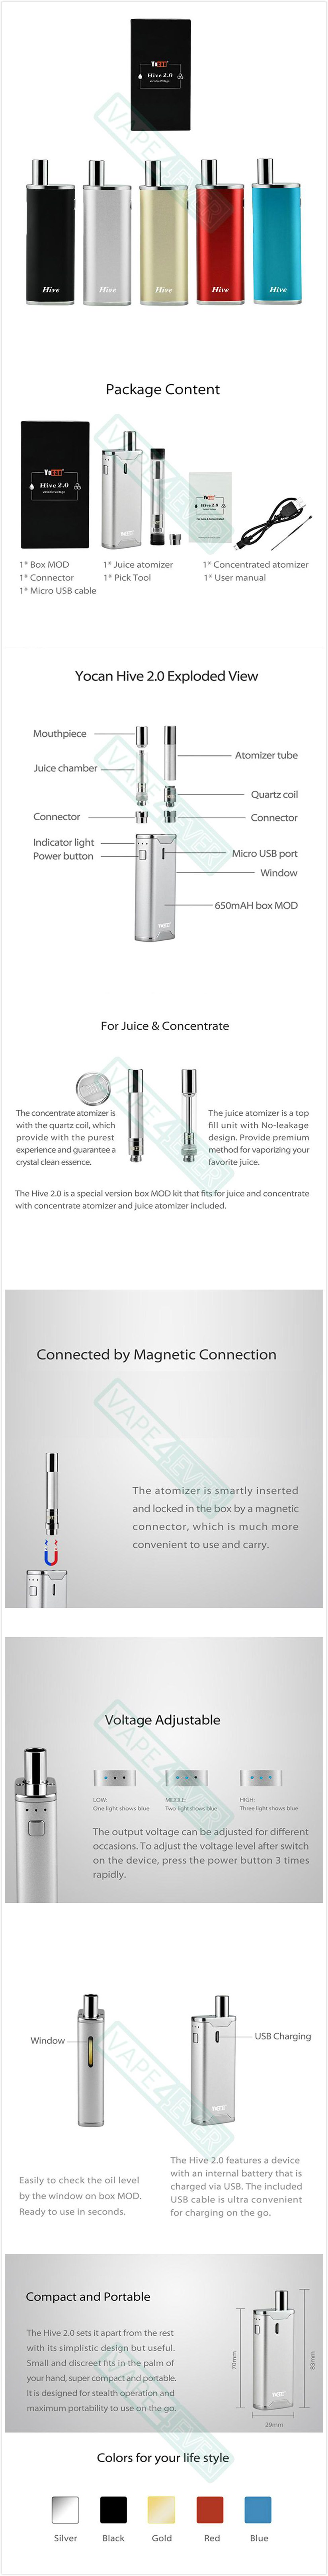 Yocan Hive 2.0 AIO Vaporizer Starter Kit 650mAh Battery E-juice&Concentrate Vape Kit Instruction